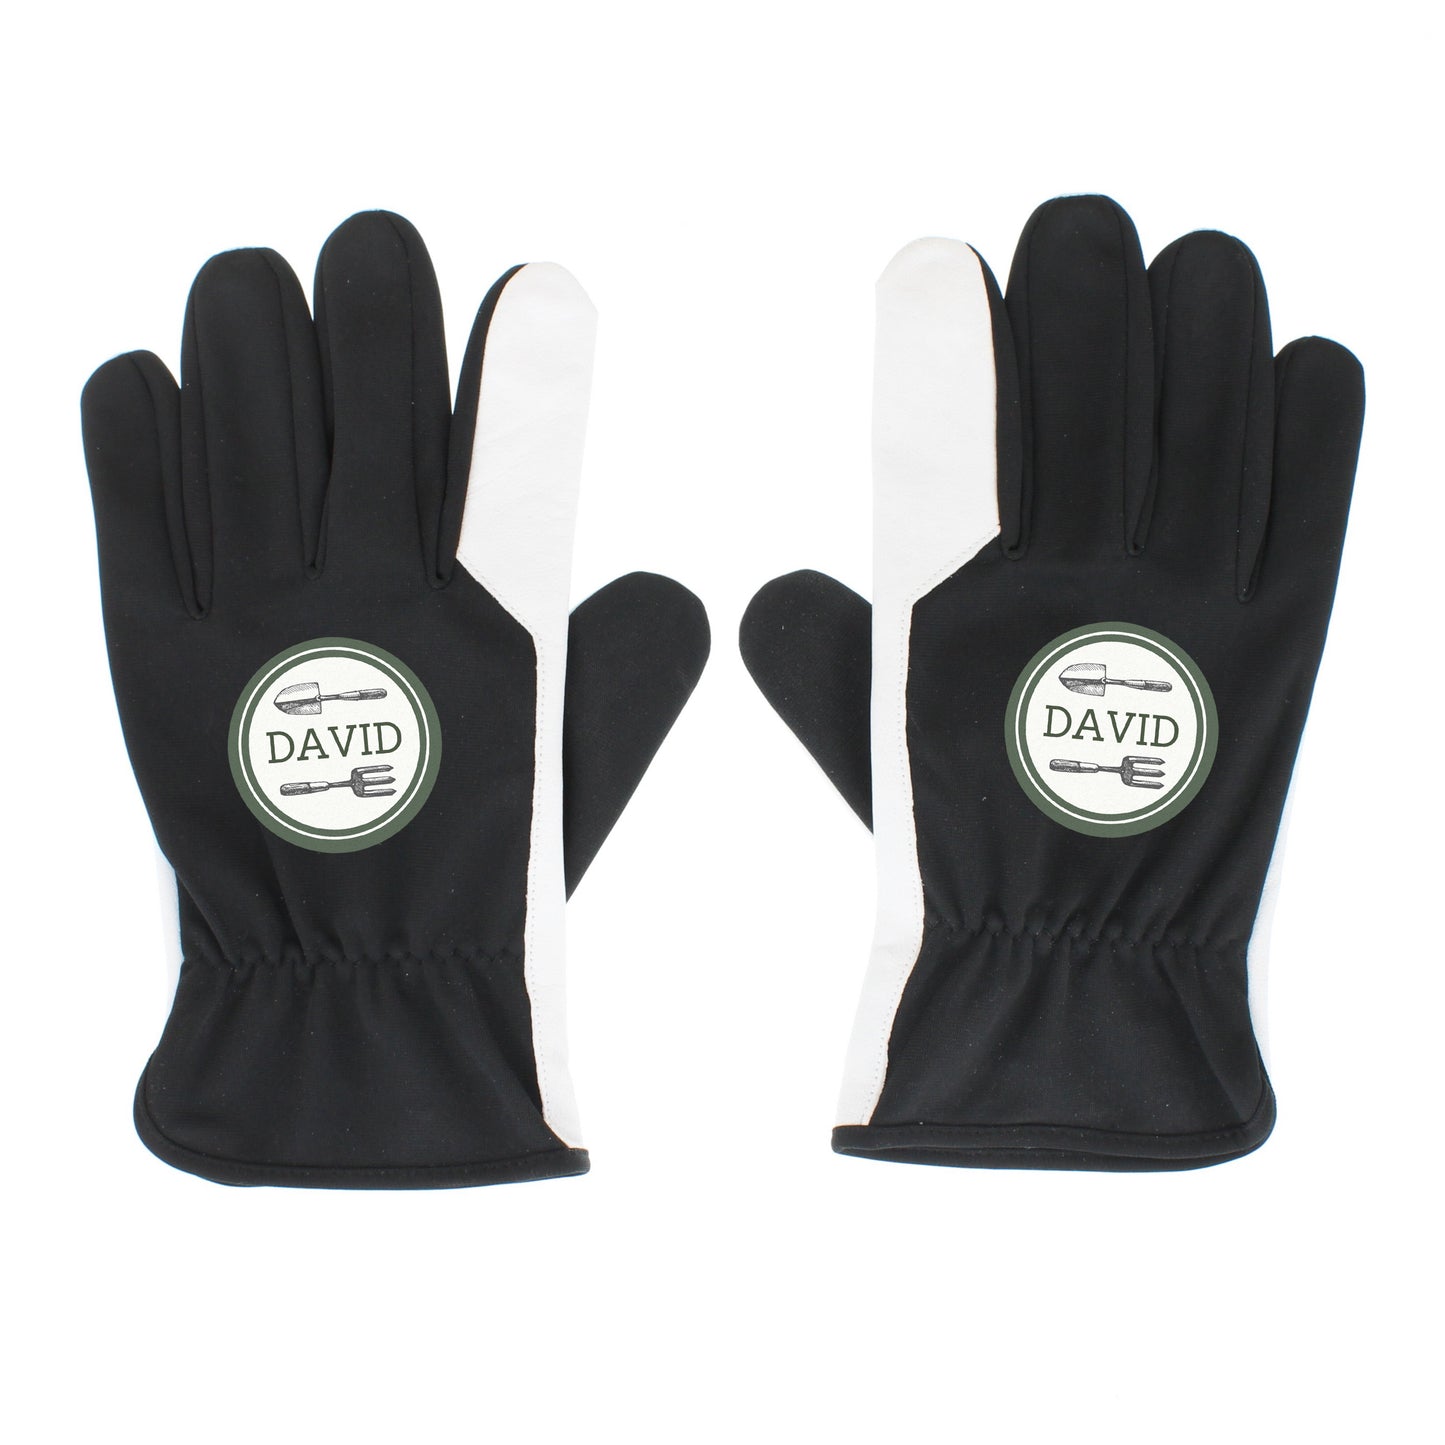 Personalised Black Garden Gloves